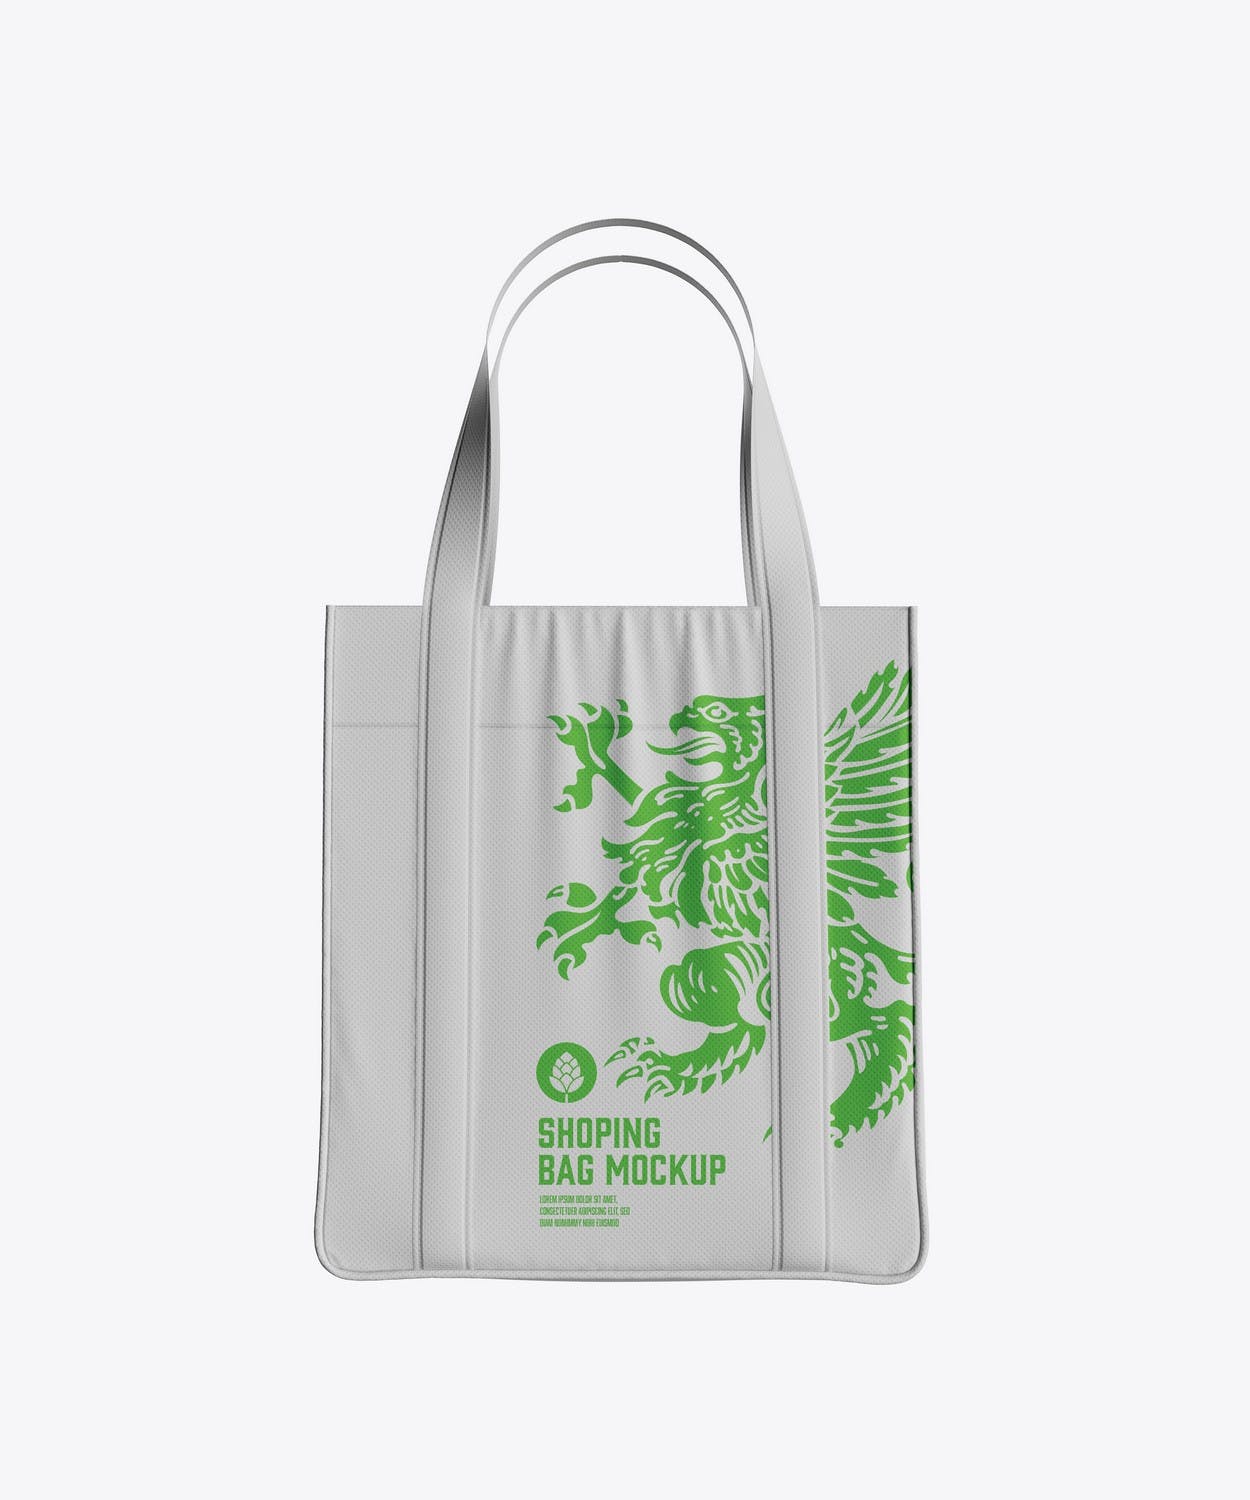 生态帆布袋包装Logo设计样机 Eco Canvas Bag Mockup 样机素材 第2张